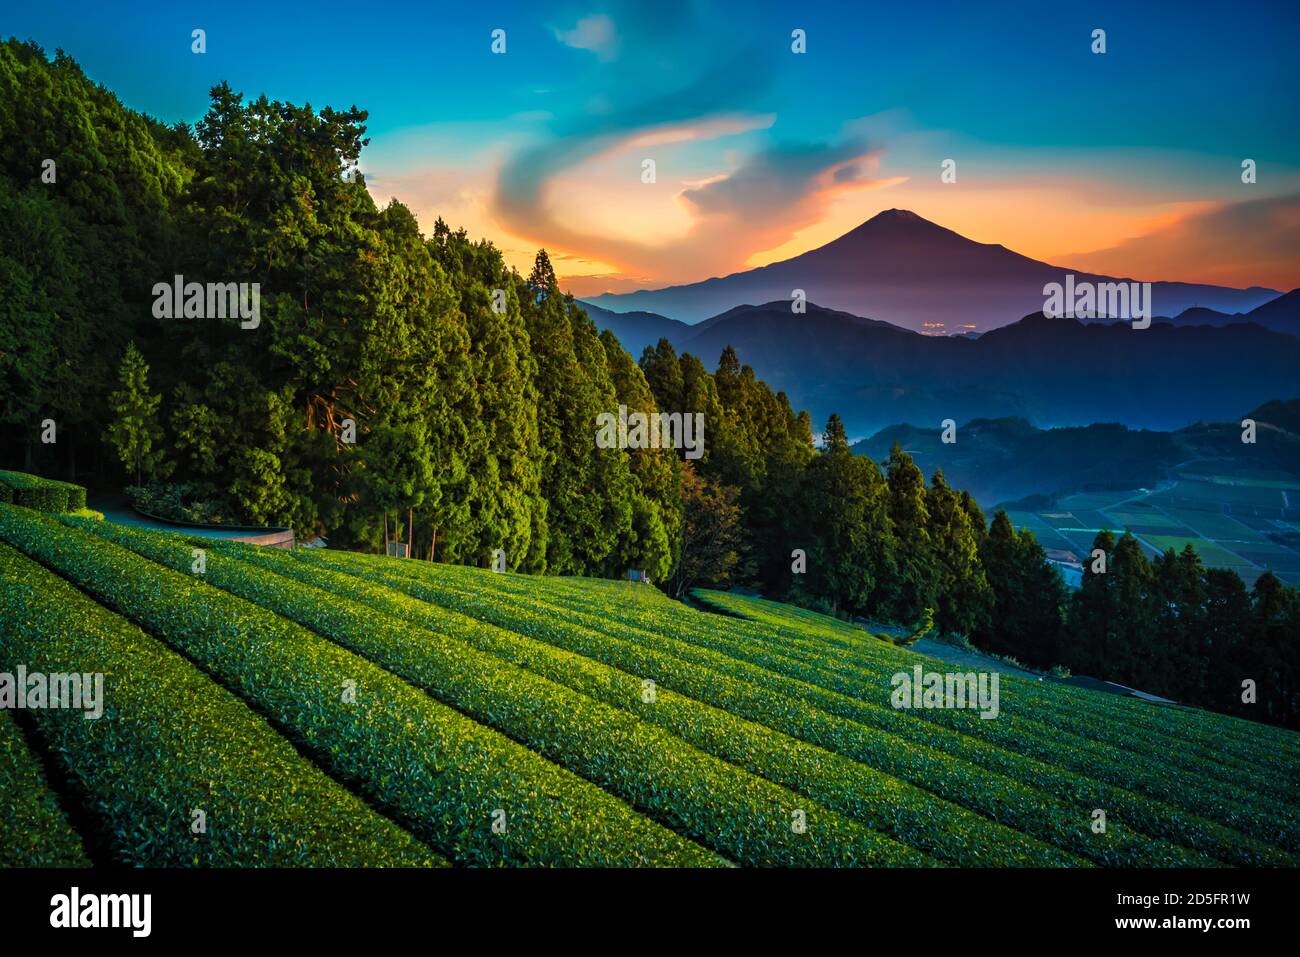 Mt. Fuji with green tea field at sunrise in Shizuoka, Japan. Stock Photo